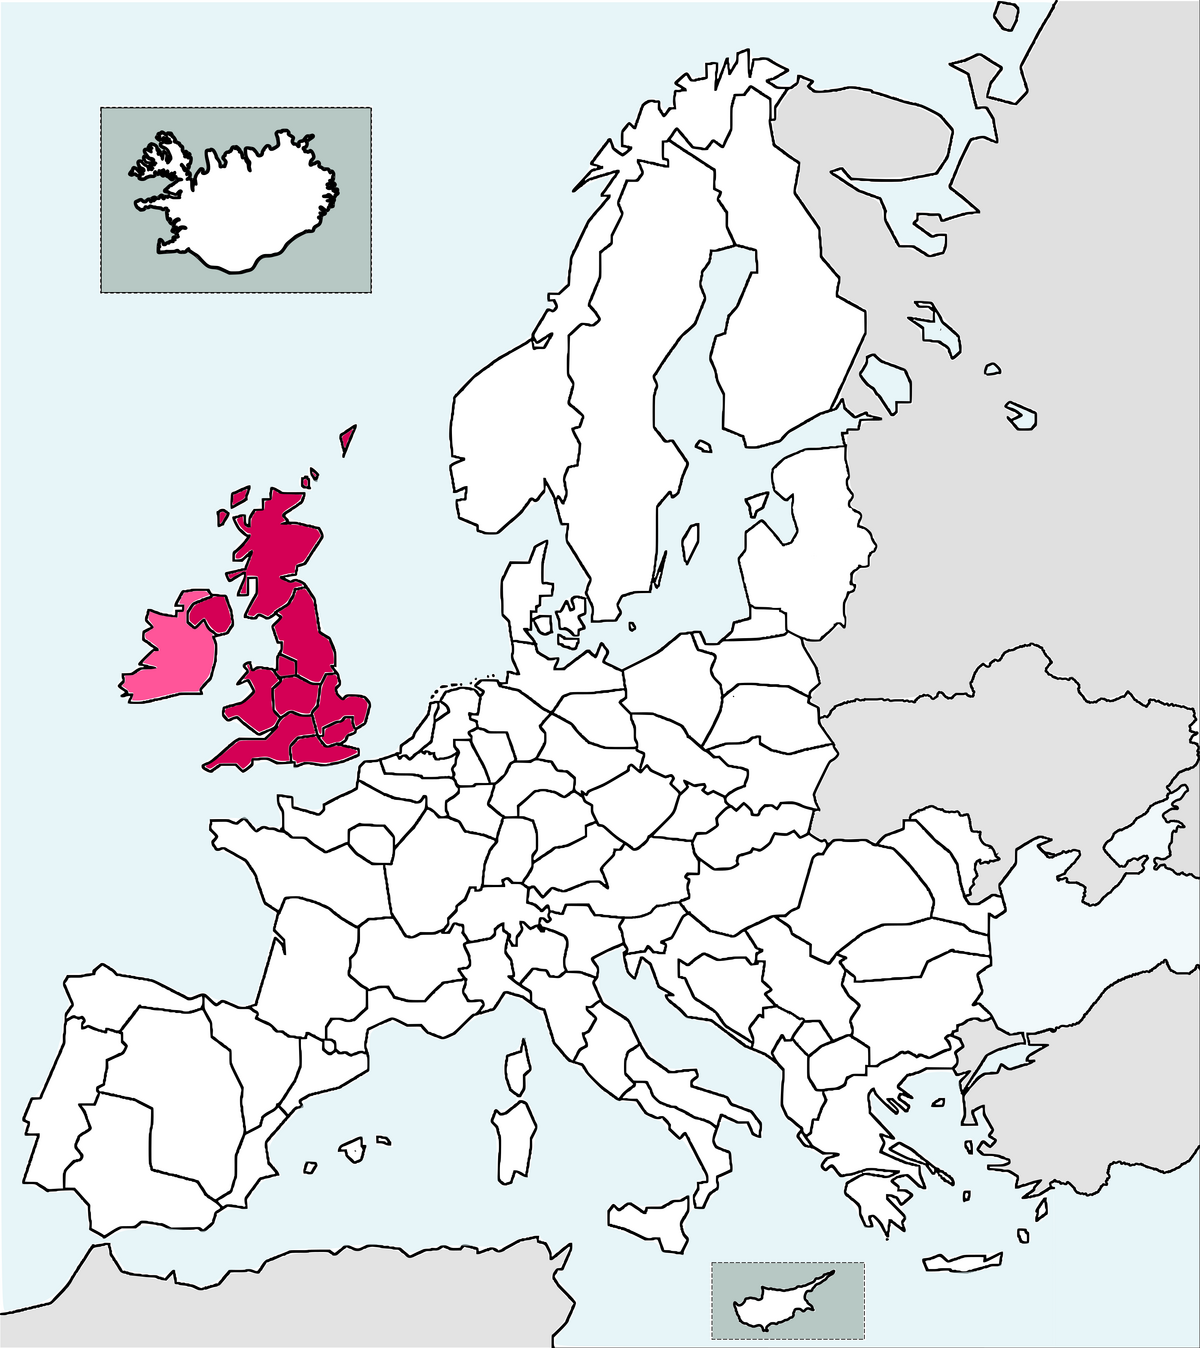 The British Isles | Ideas for a Federal Europe Wiki | Fandom